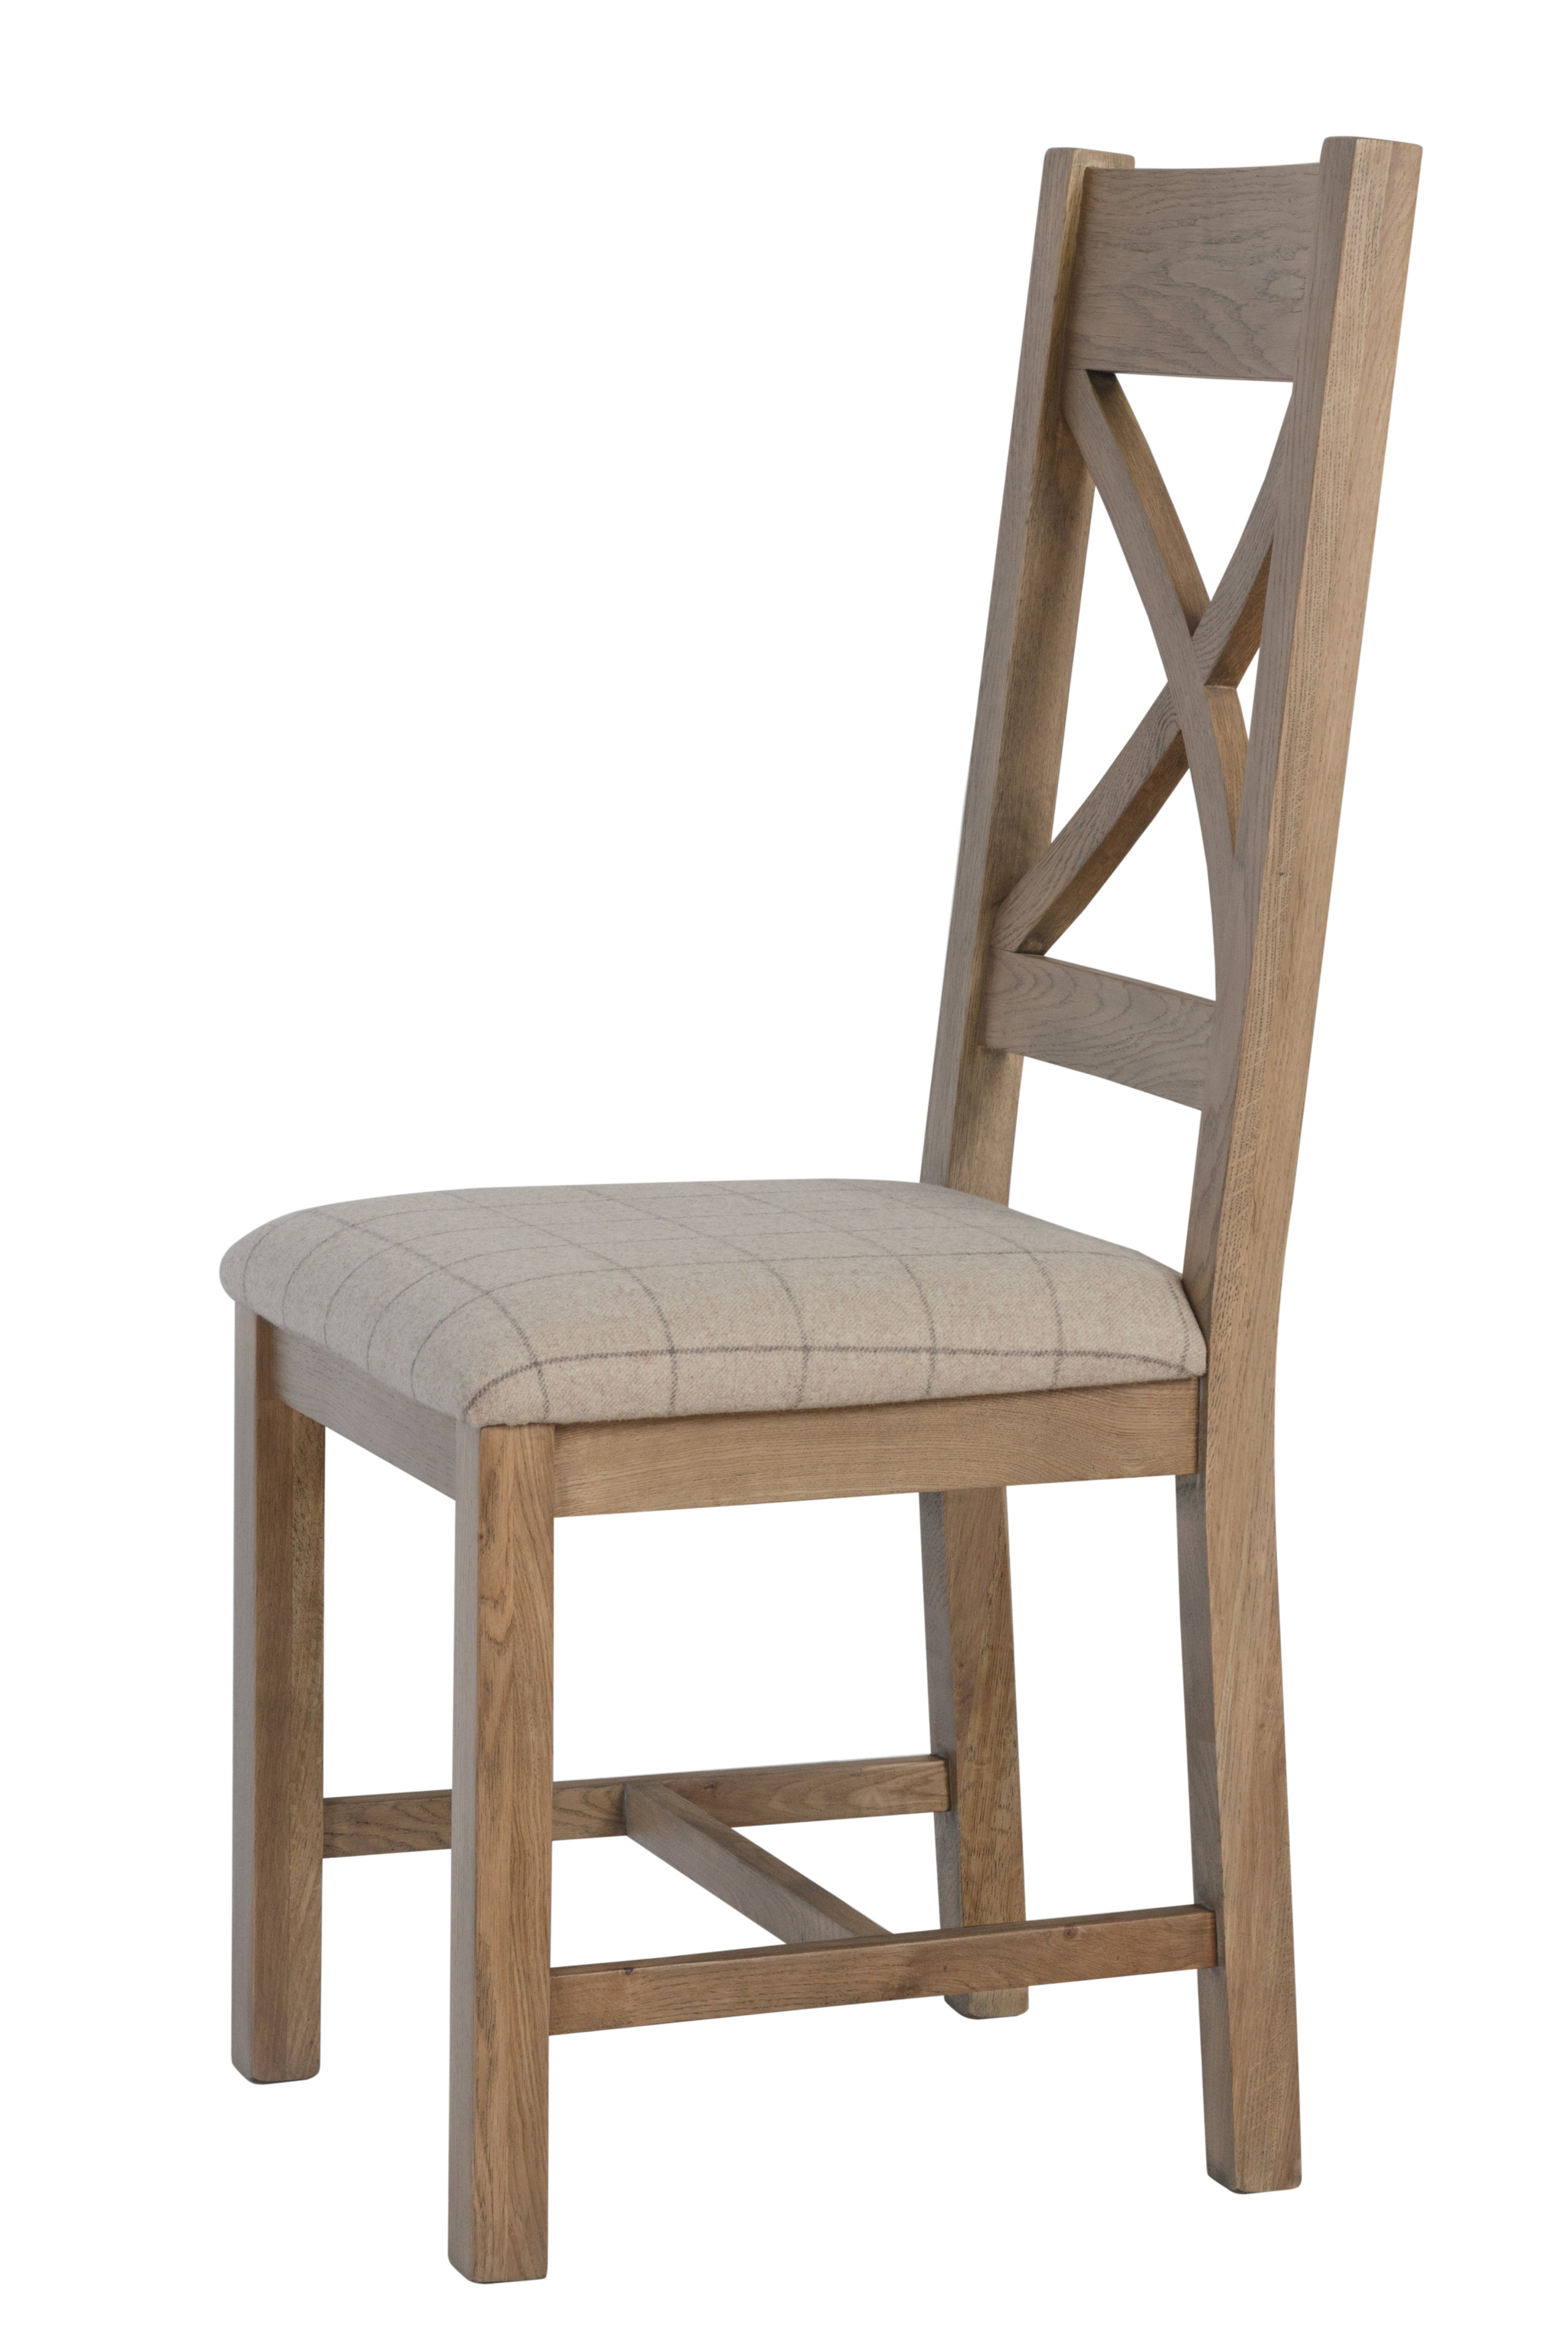 Harrogate Oak - Cross back dining chair natural check